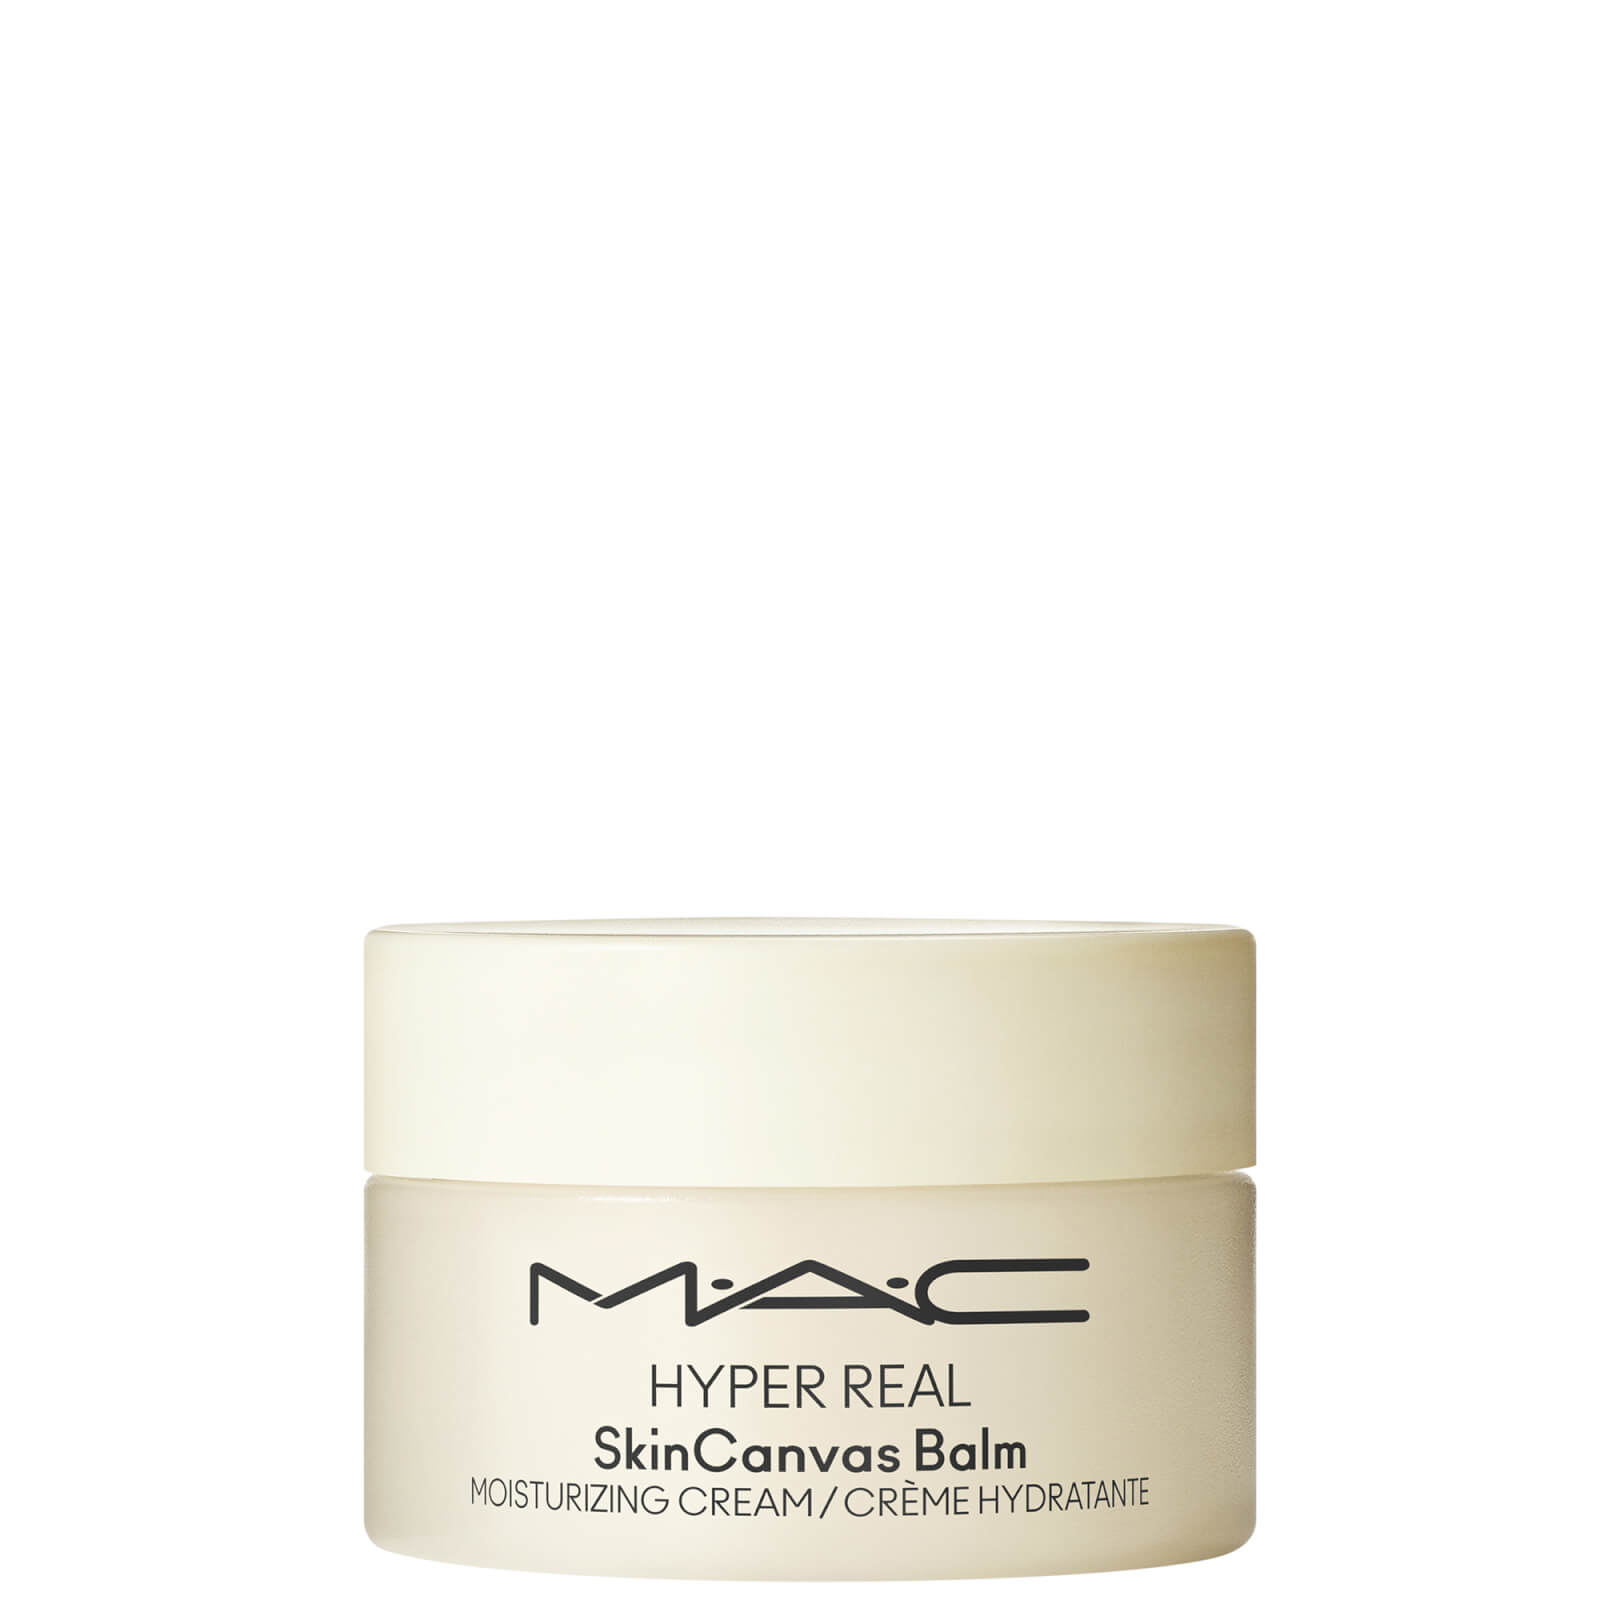 Image of MAC Hyper Real SkinCanvas BalmTM Moisturizing Cream 15ml/Mini M·A·C